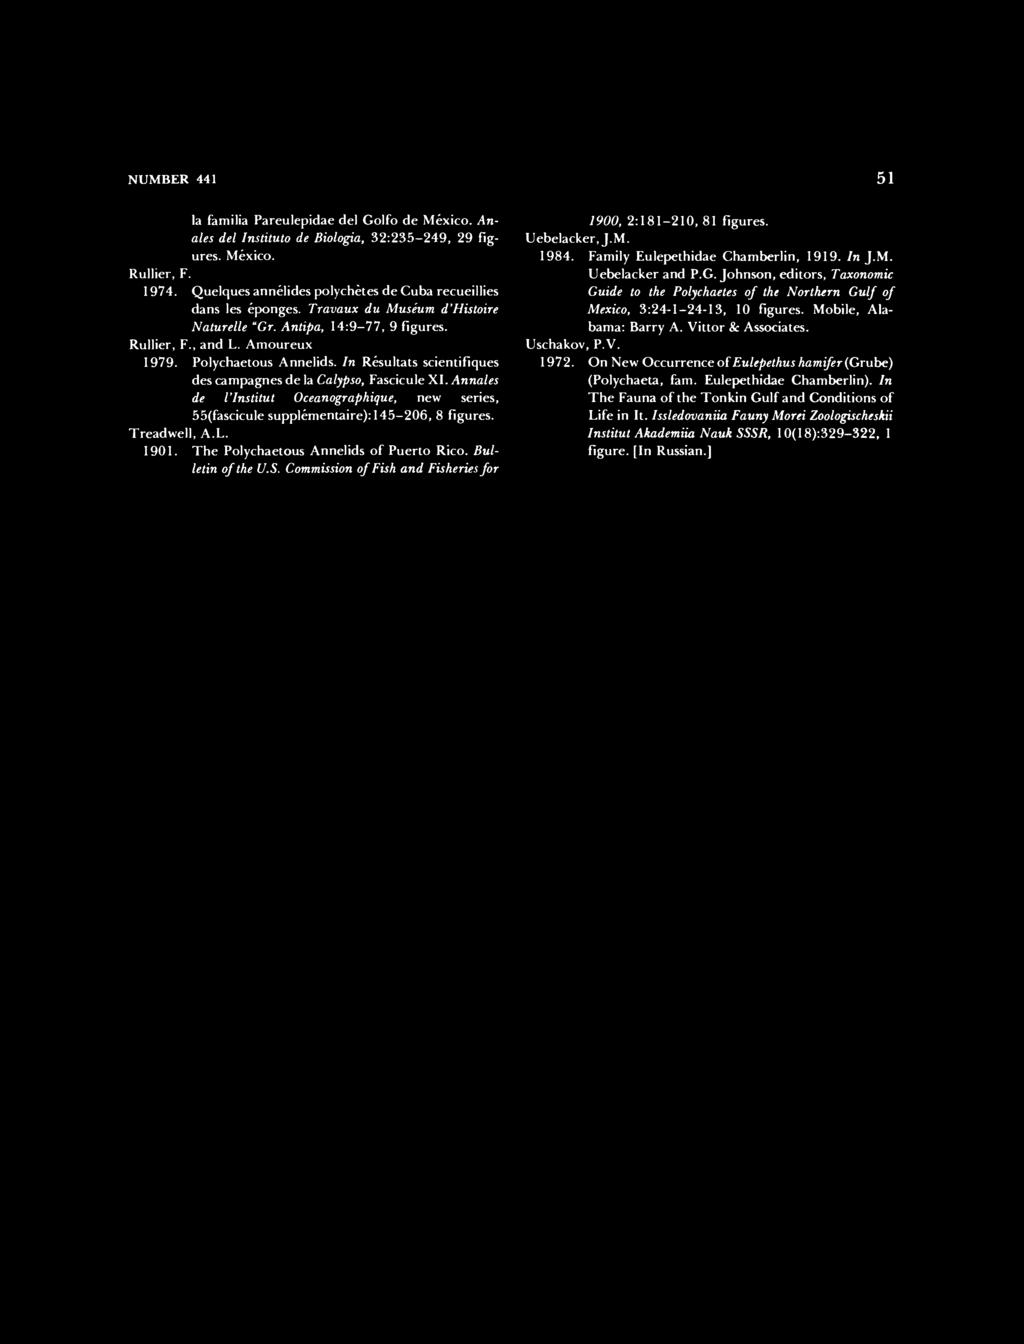 In Resultats scientifiques des campagnes de la Calypso, Fascicule XI. Annales de I'Institut Oceanographique, new series, 55(fascicule supplementaire): 145-206, 8 figures. Treadwell, A.L. 1901.